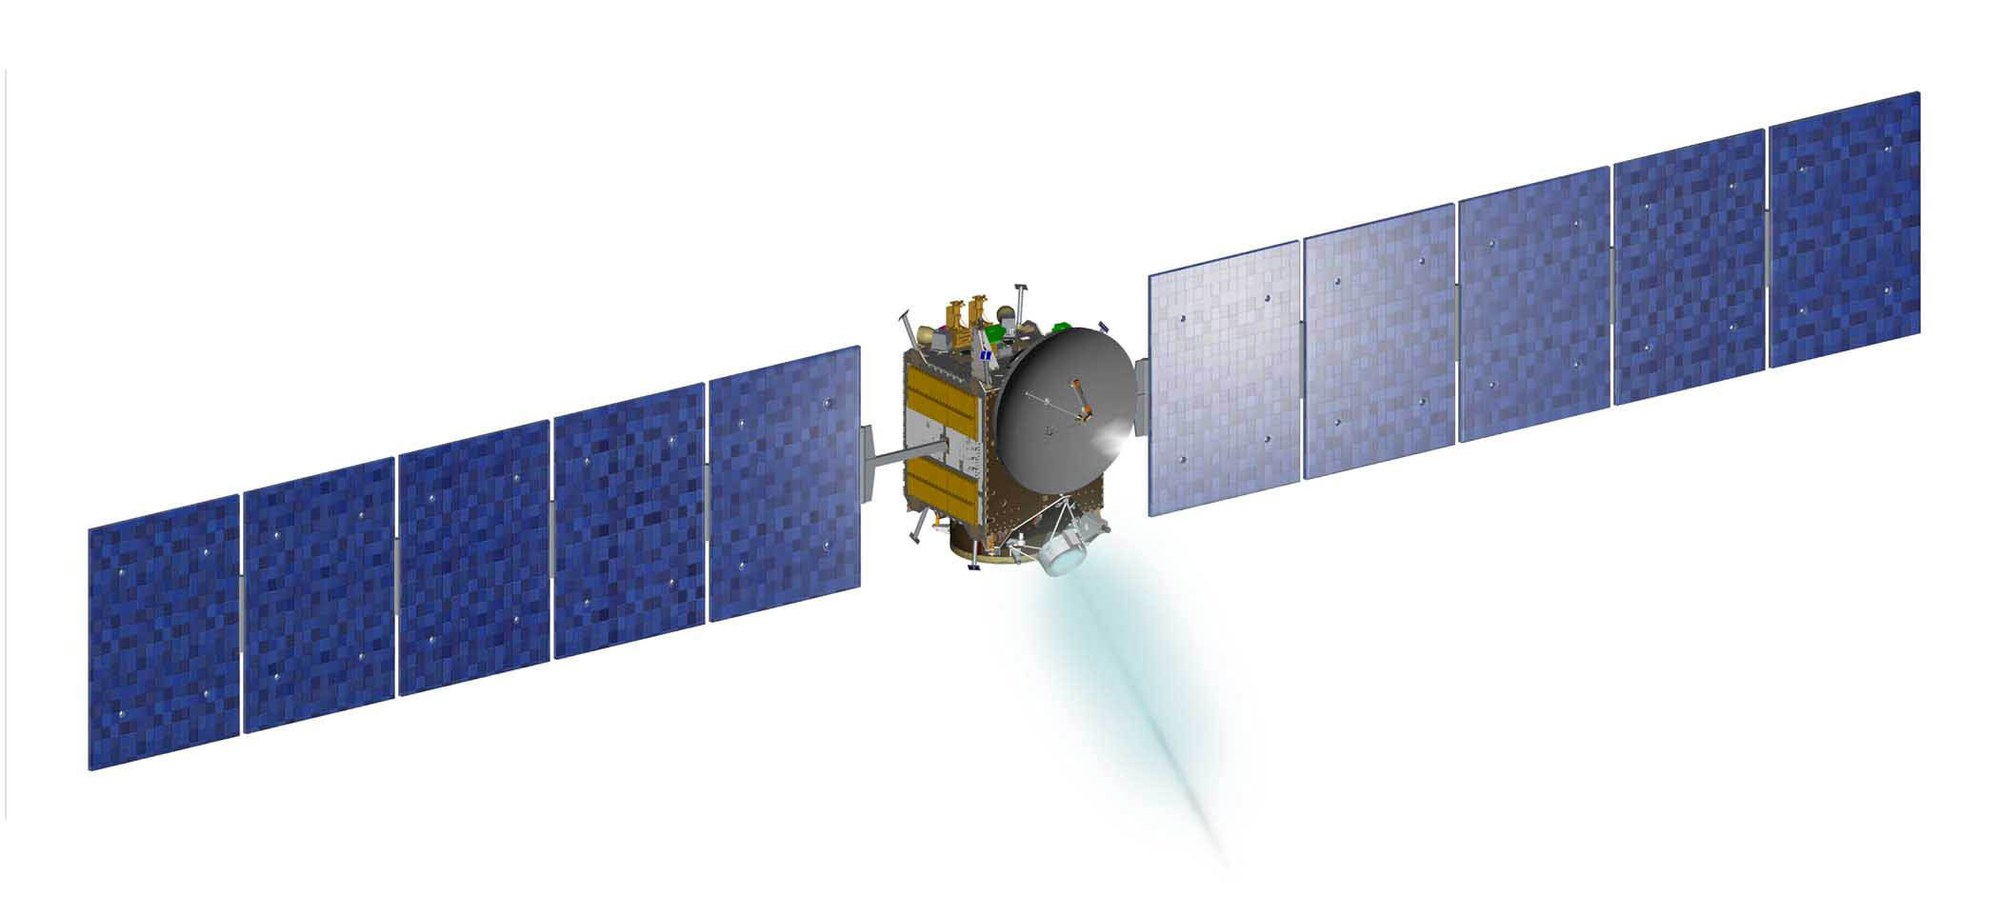 Dawn spacecraft with ion engine